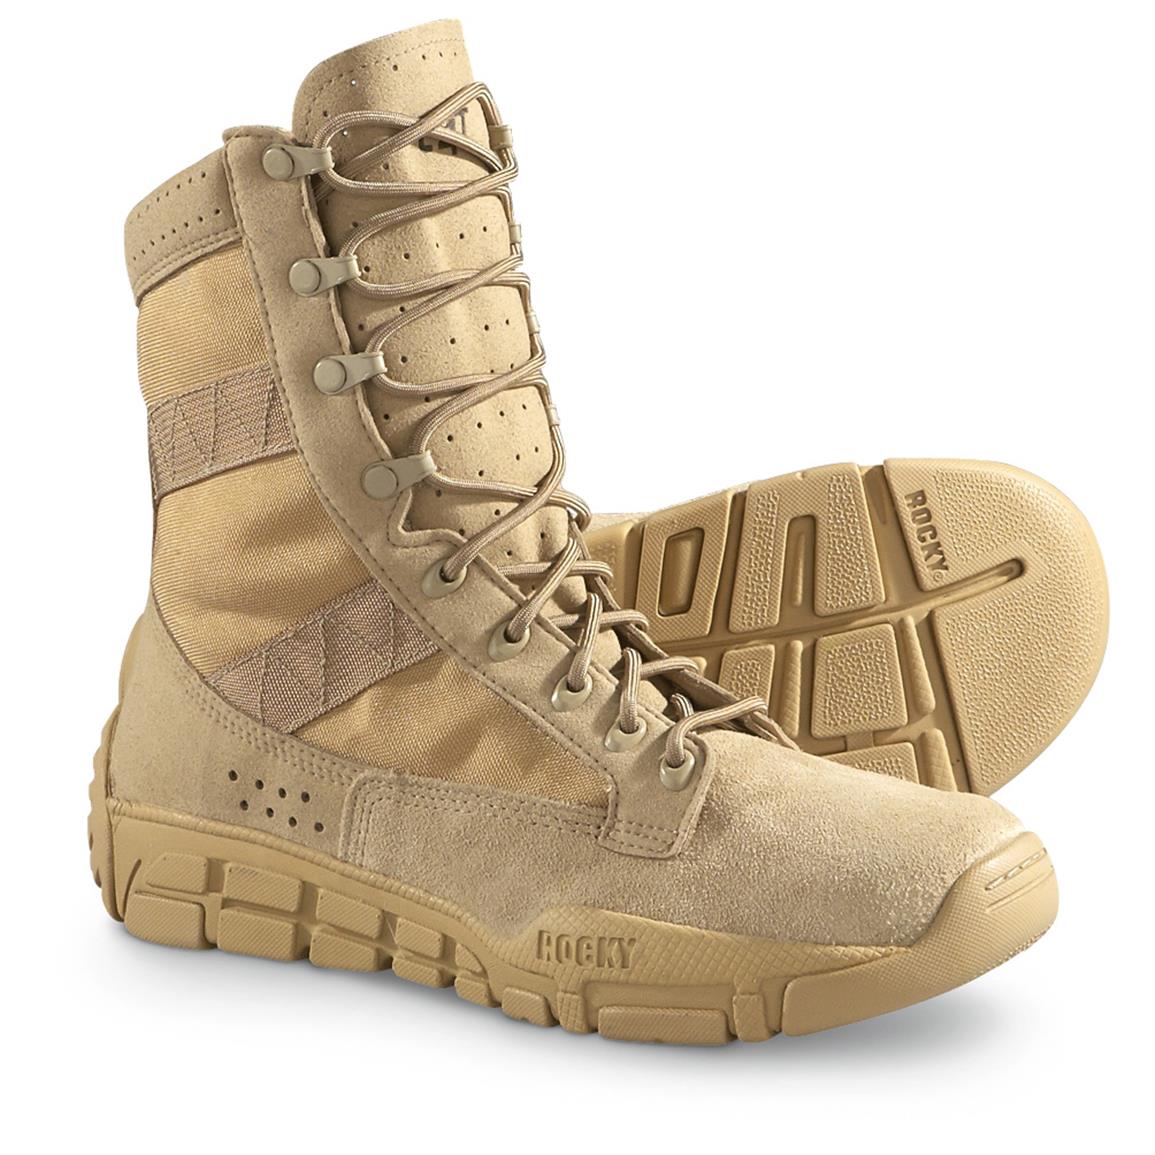 Rocky C4T Trainer Military Duty Boots, Desert Tan - 621589, Combat ...